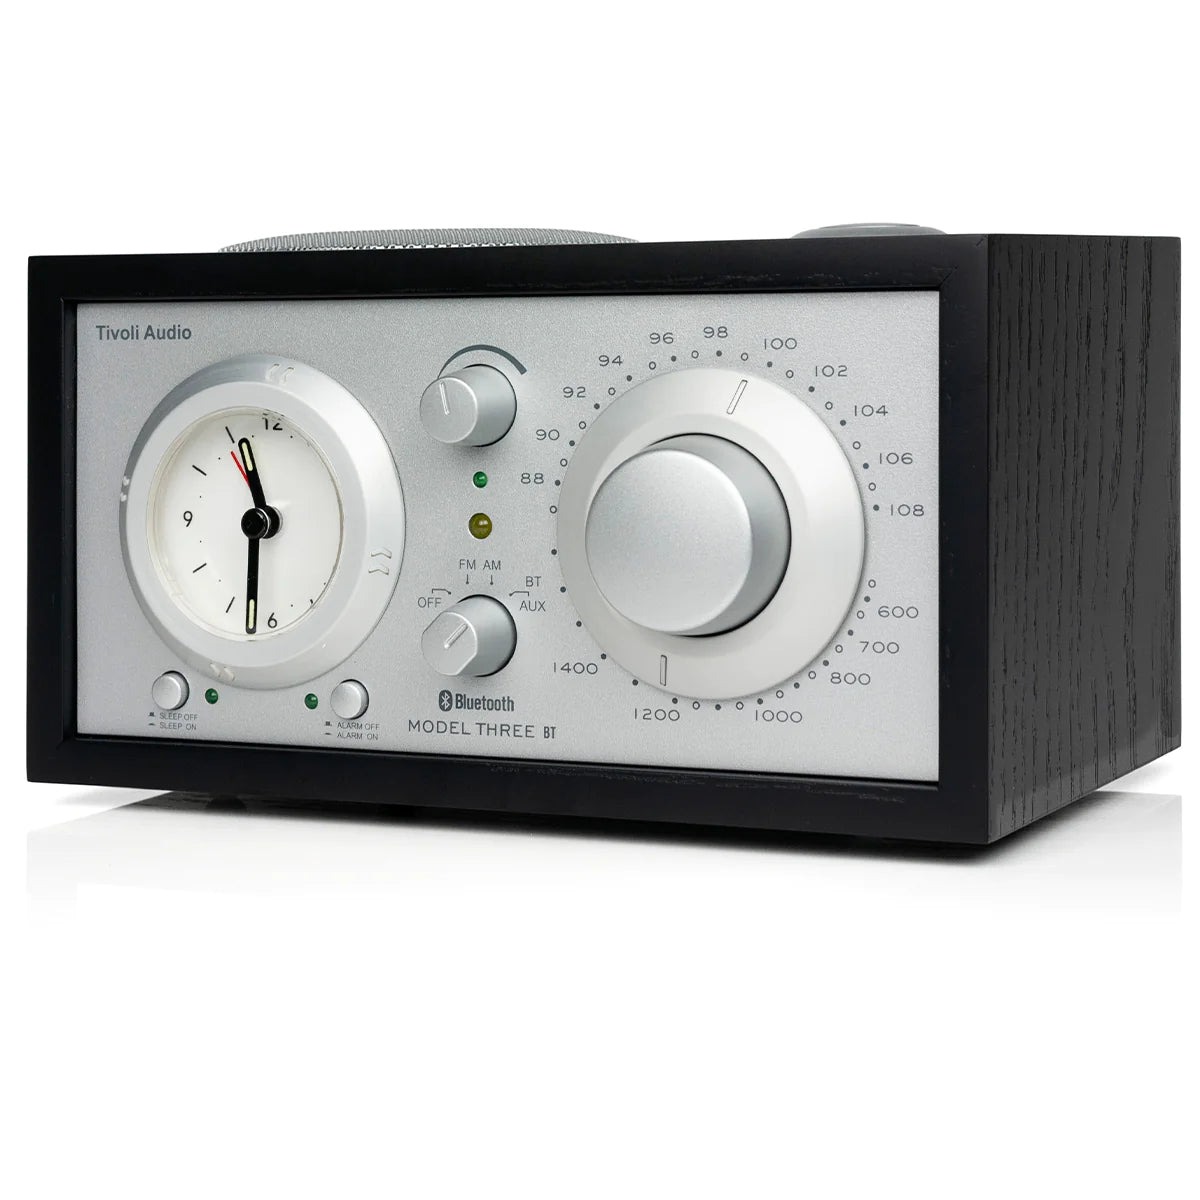 The Tivoli Audio Model Three BT blends classic design, superior sound and Bluetooth connectivity. Side black image